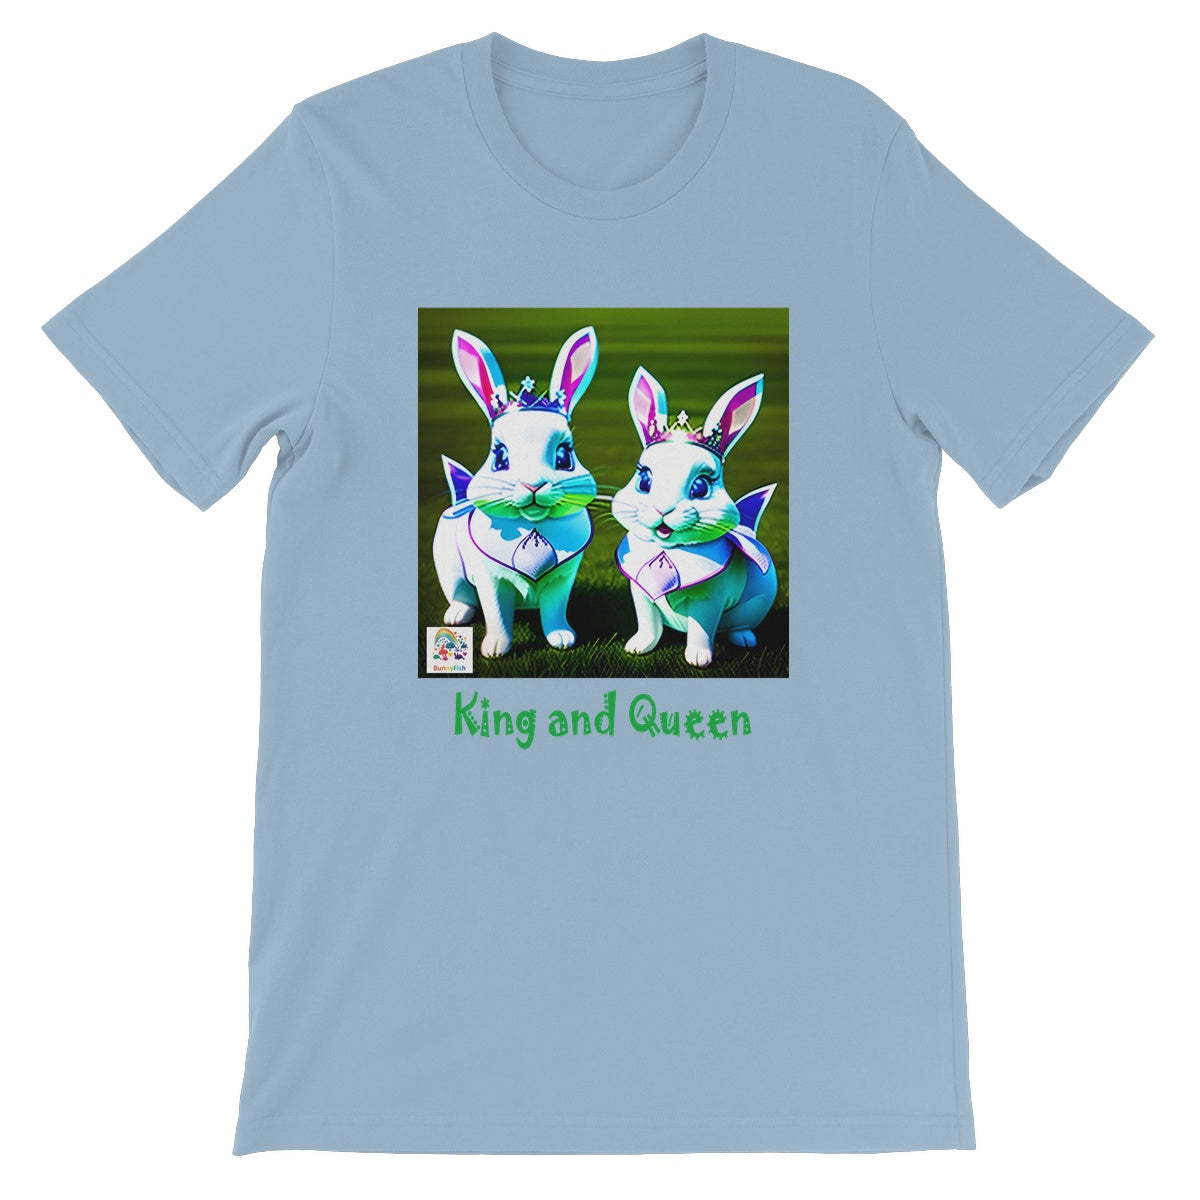 King and Queen Grownups' T-Shirt